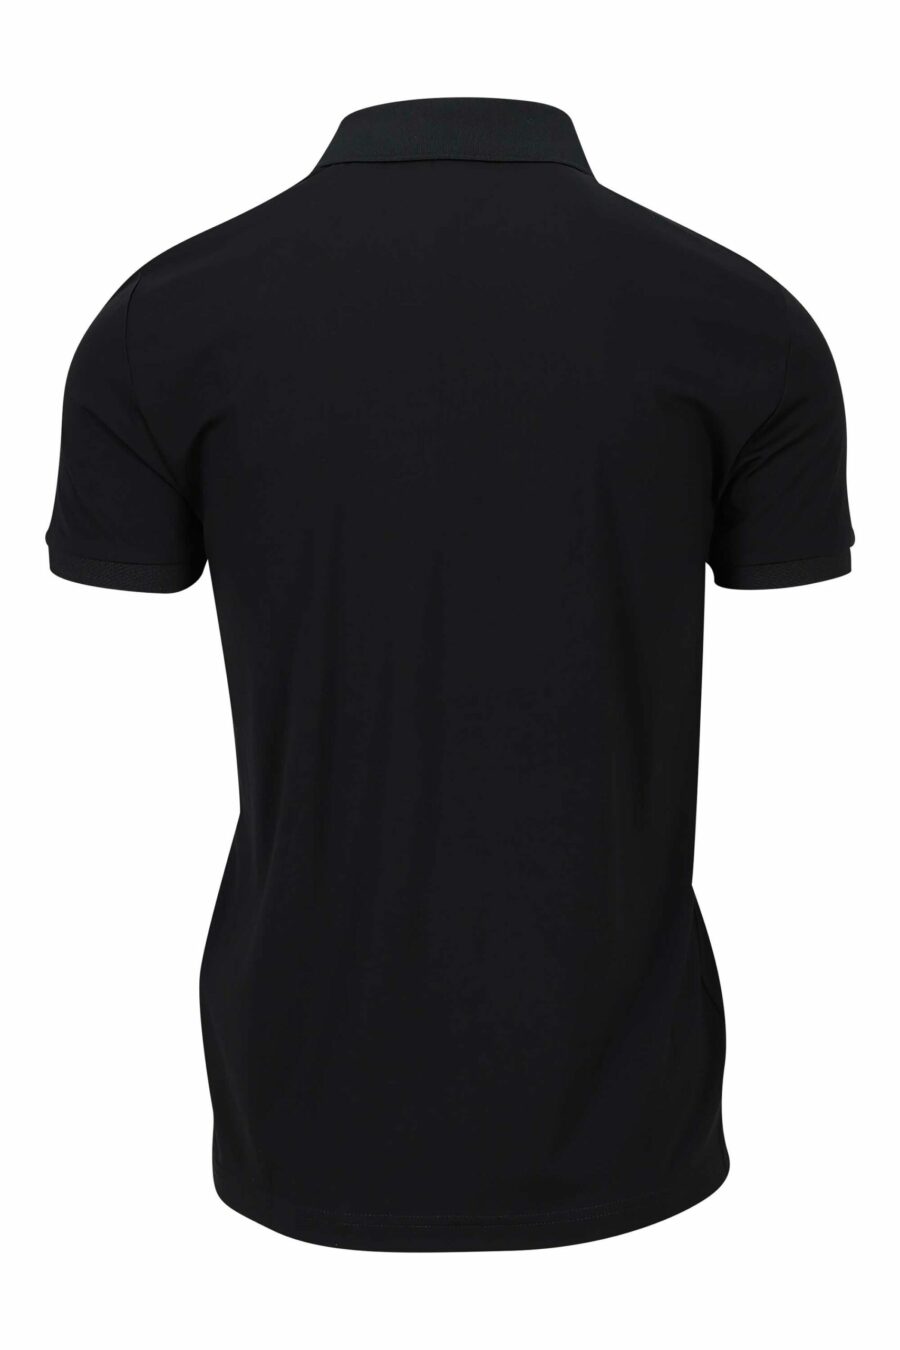 Black polo shirt with "lux identity" mini logo - 8057767614805 1 scaled